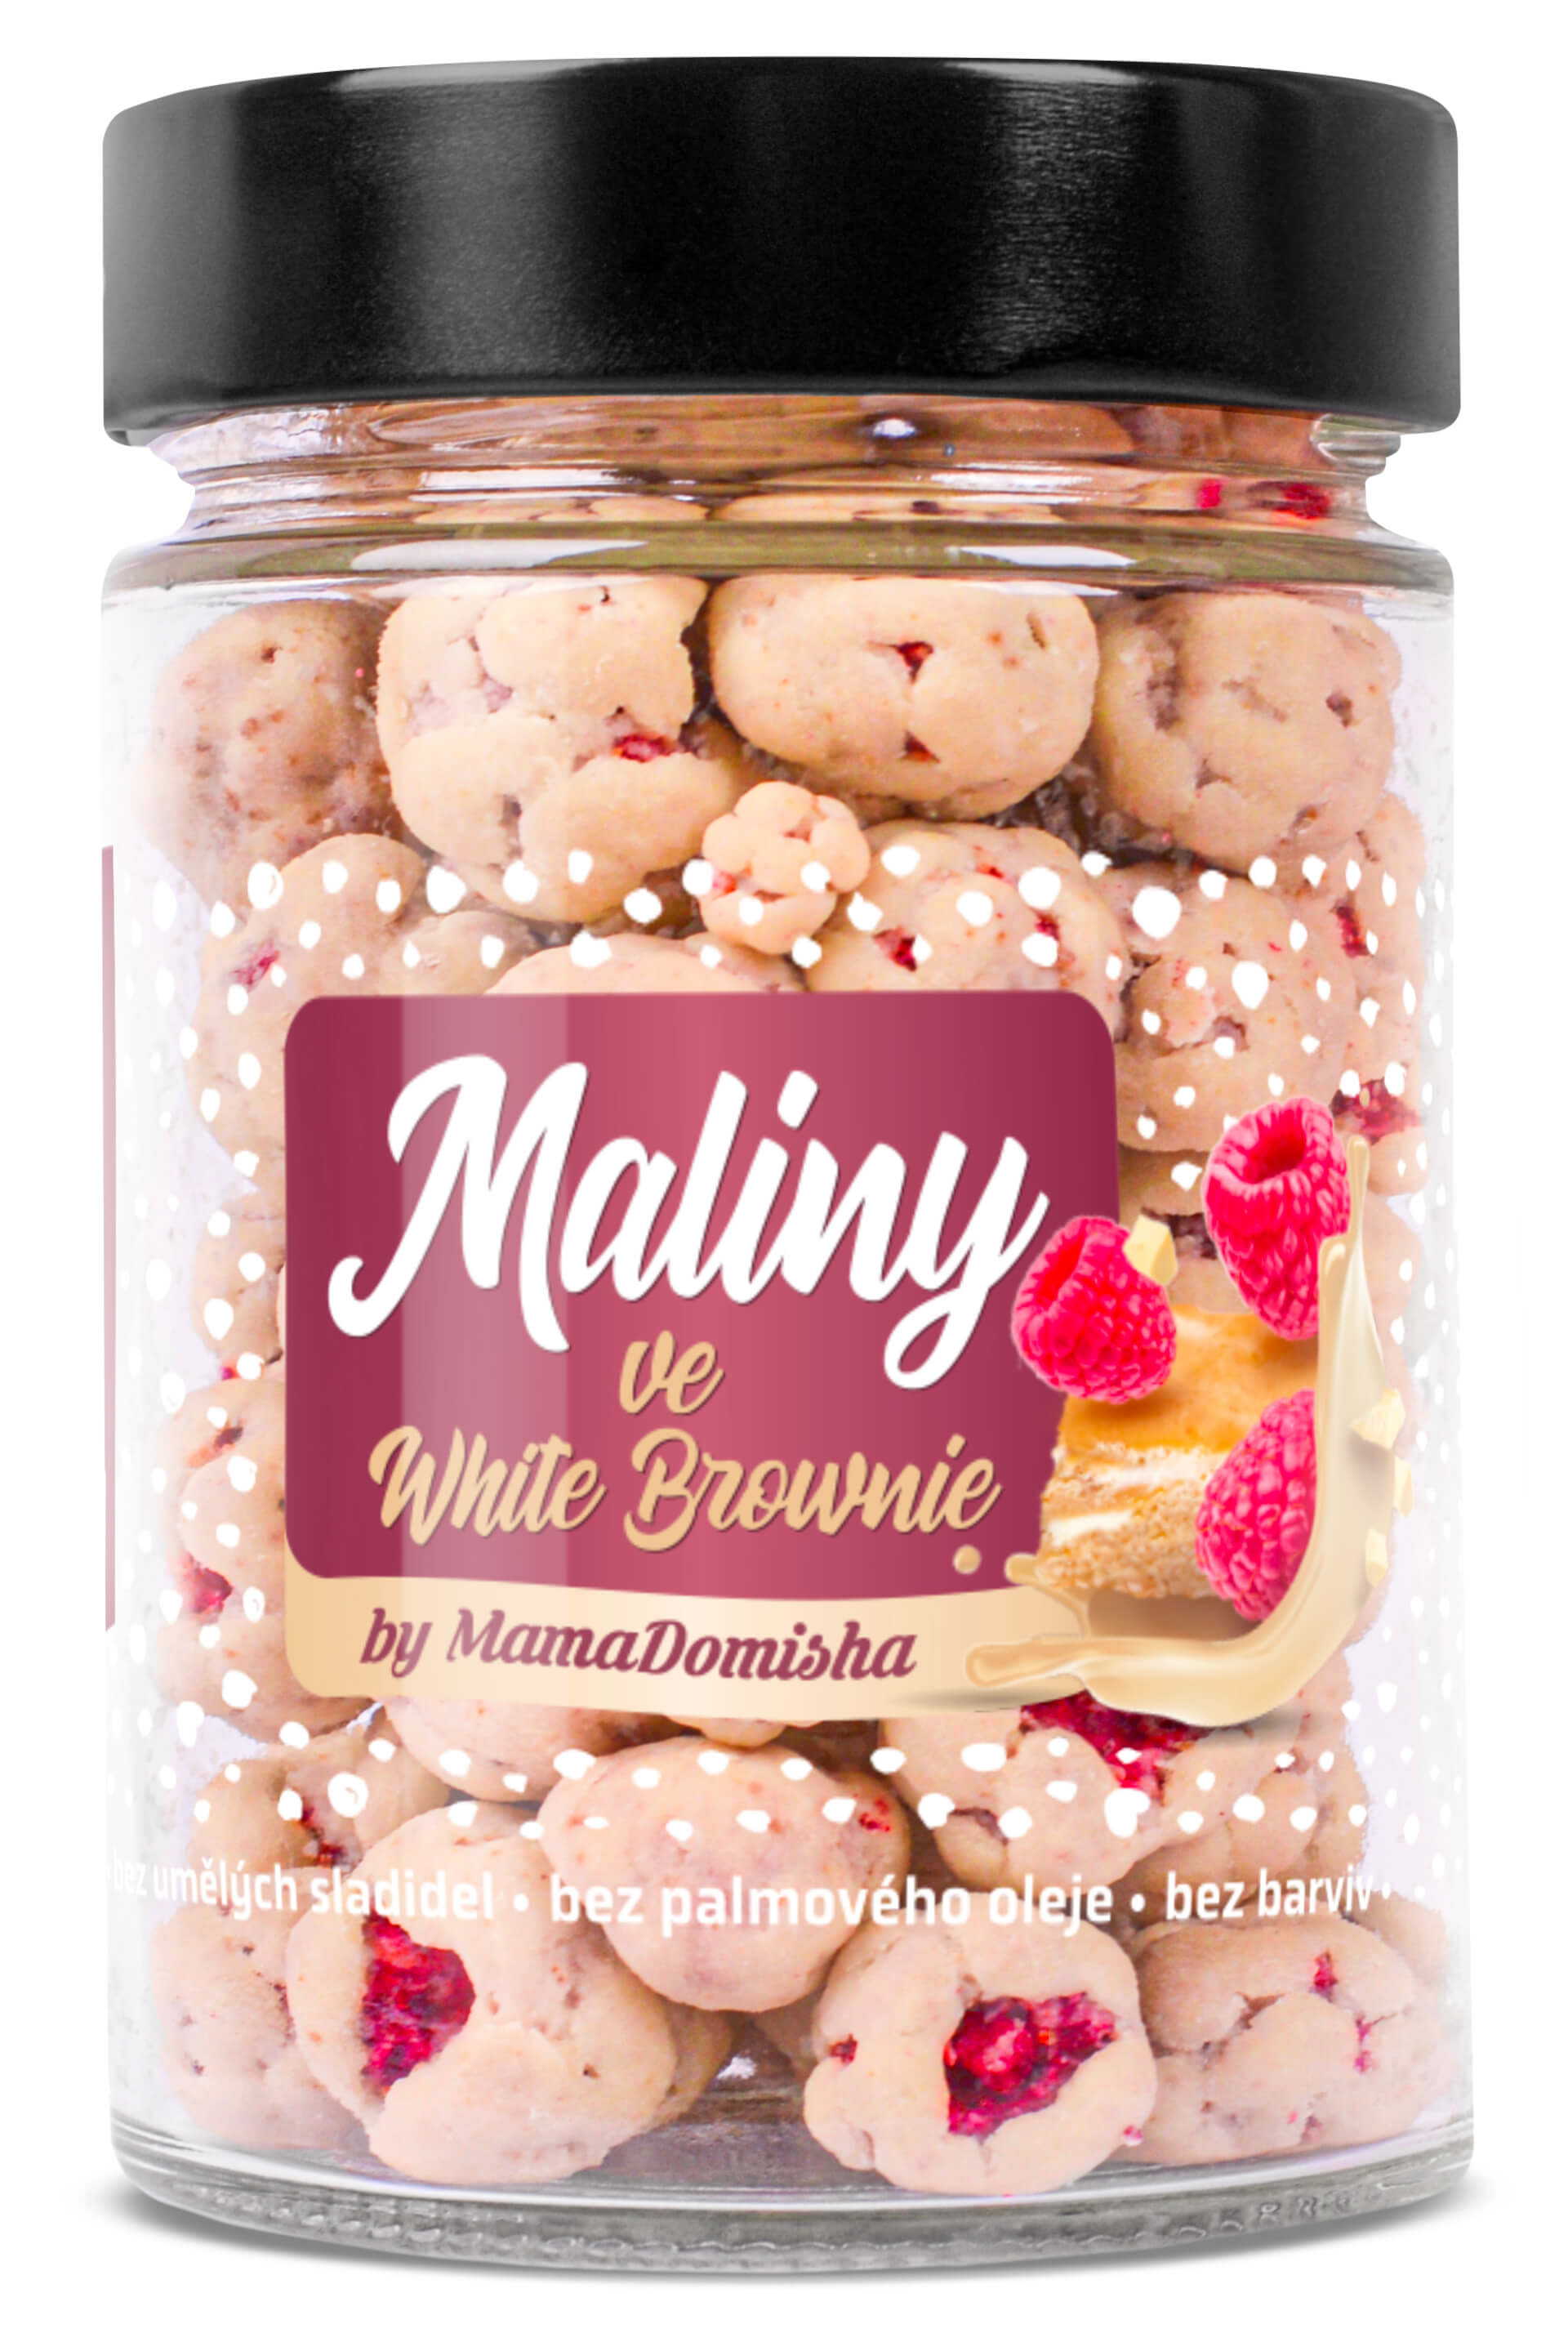 GRIZLY Maliny v bílé čokoládě s krémem White Brownie by @mamadomisha 90 g